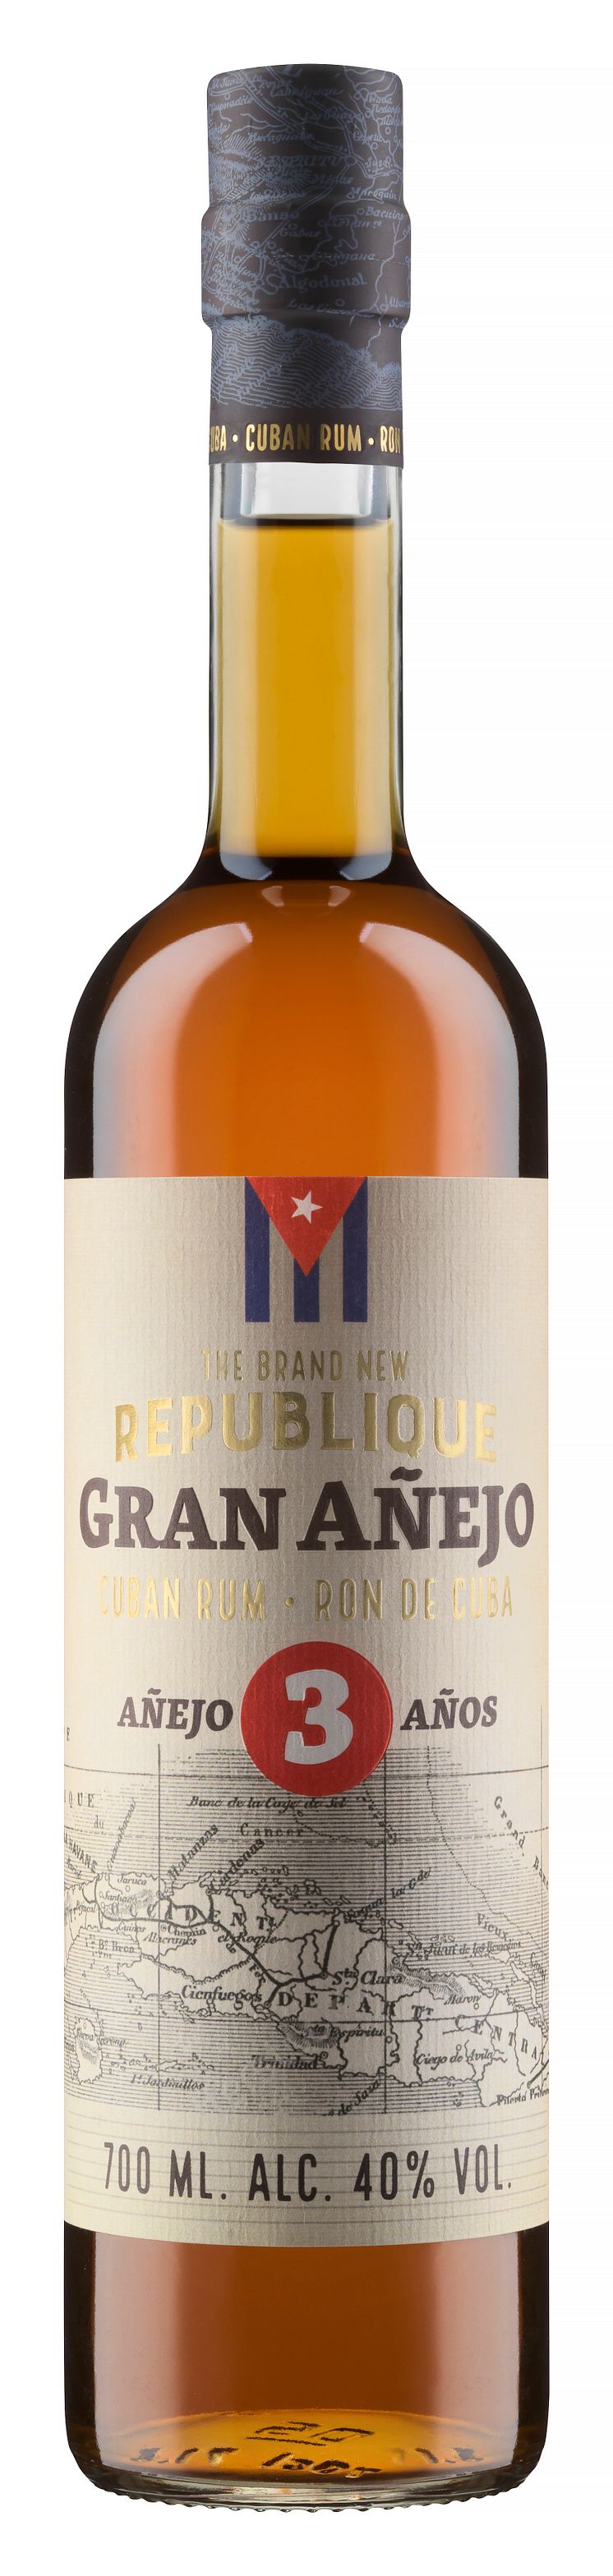 The Brand New Republique Gran Añejo